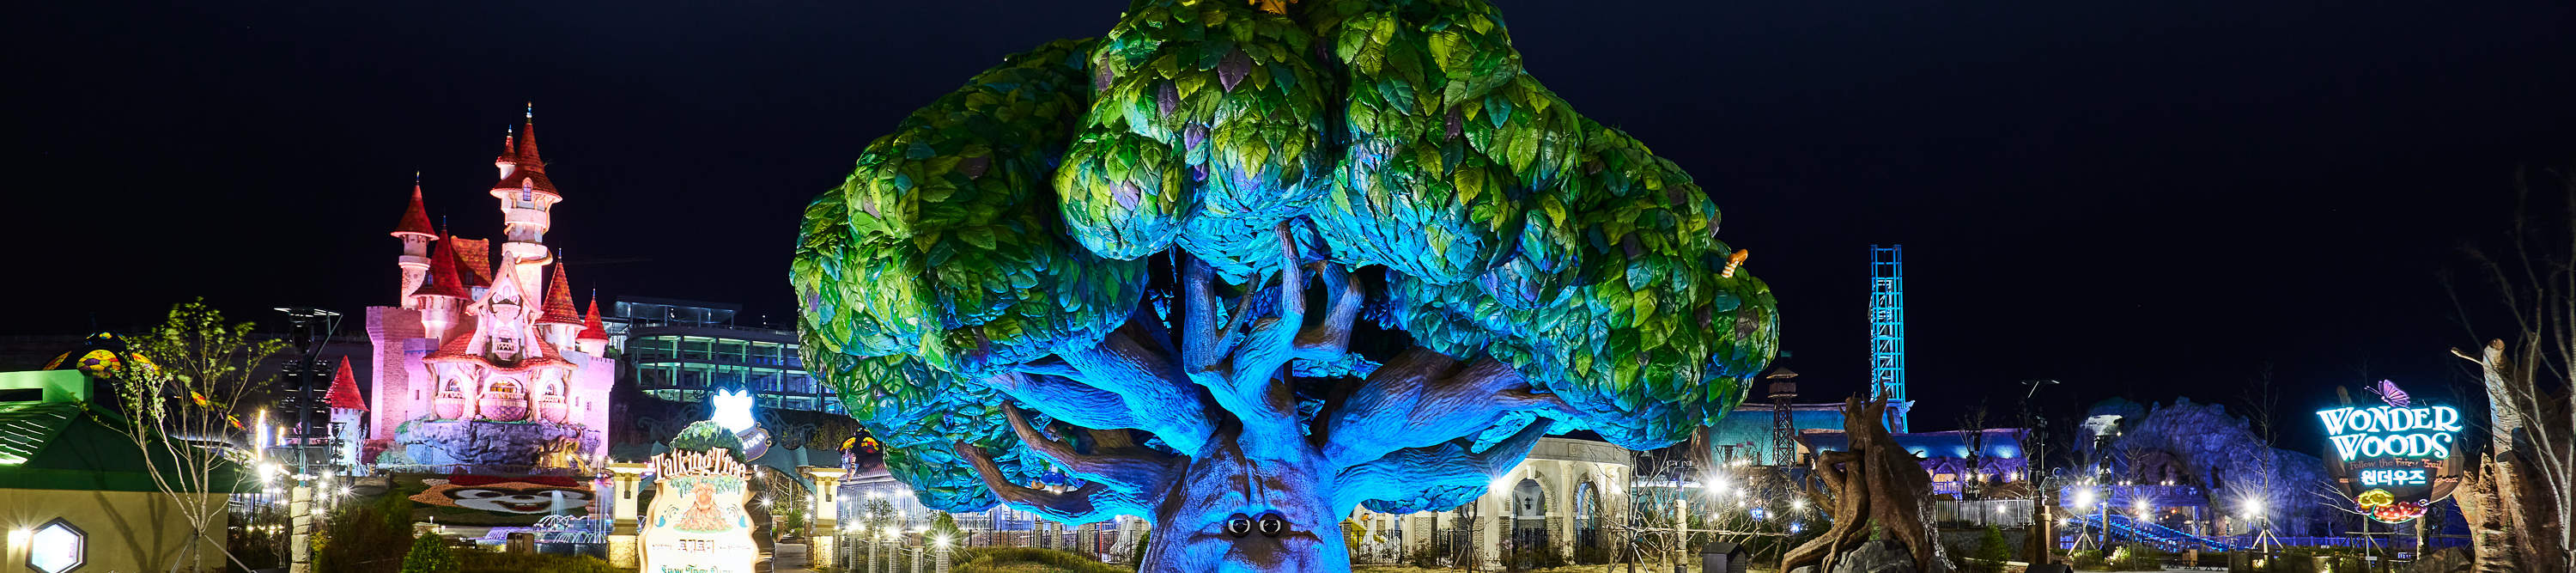 Night view of tree